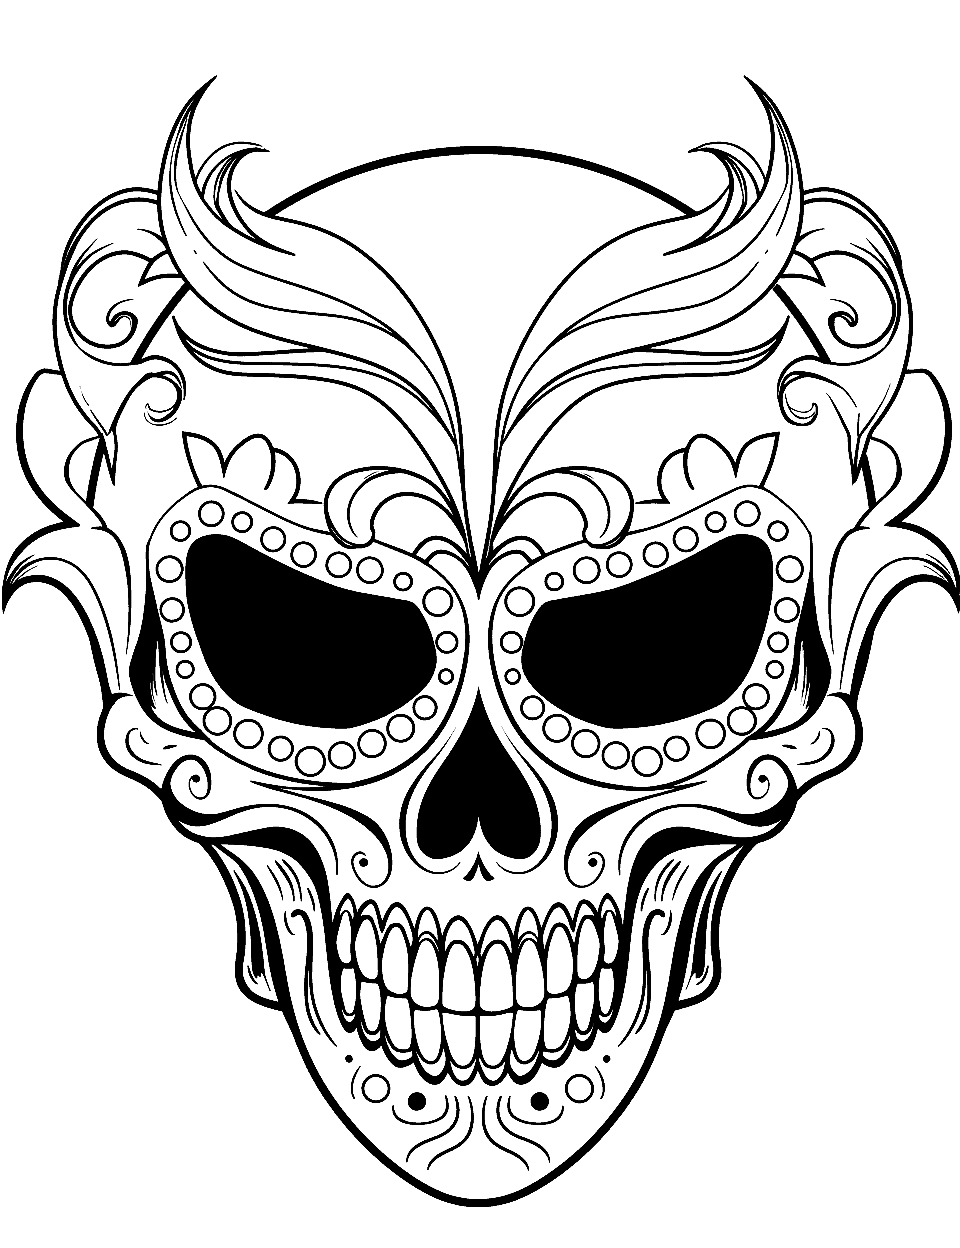 Mysterious Masquerade Skull Coloring Page - A skull wearing an elaborate masquerade mask.